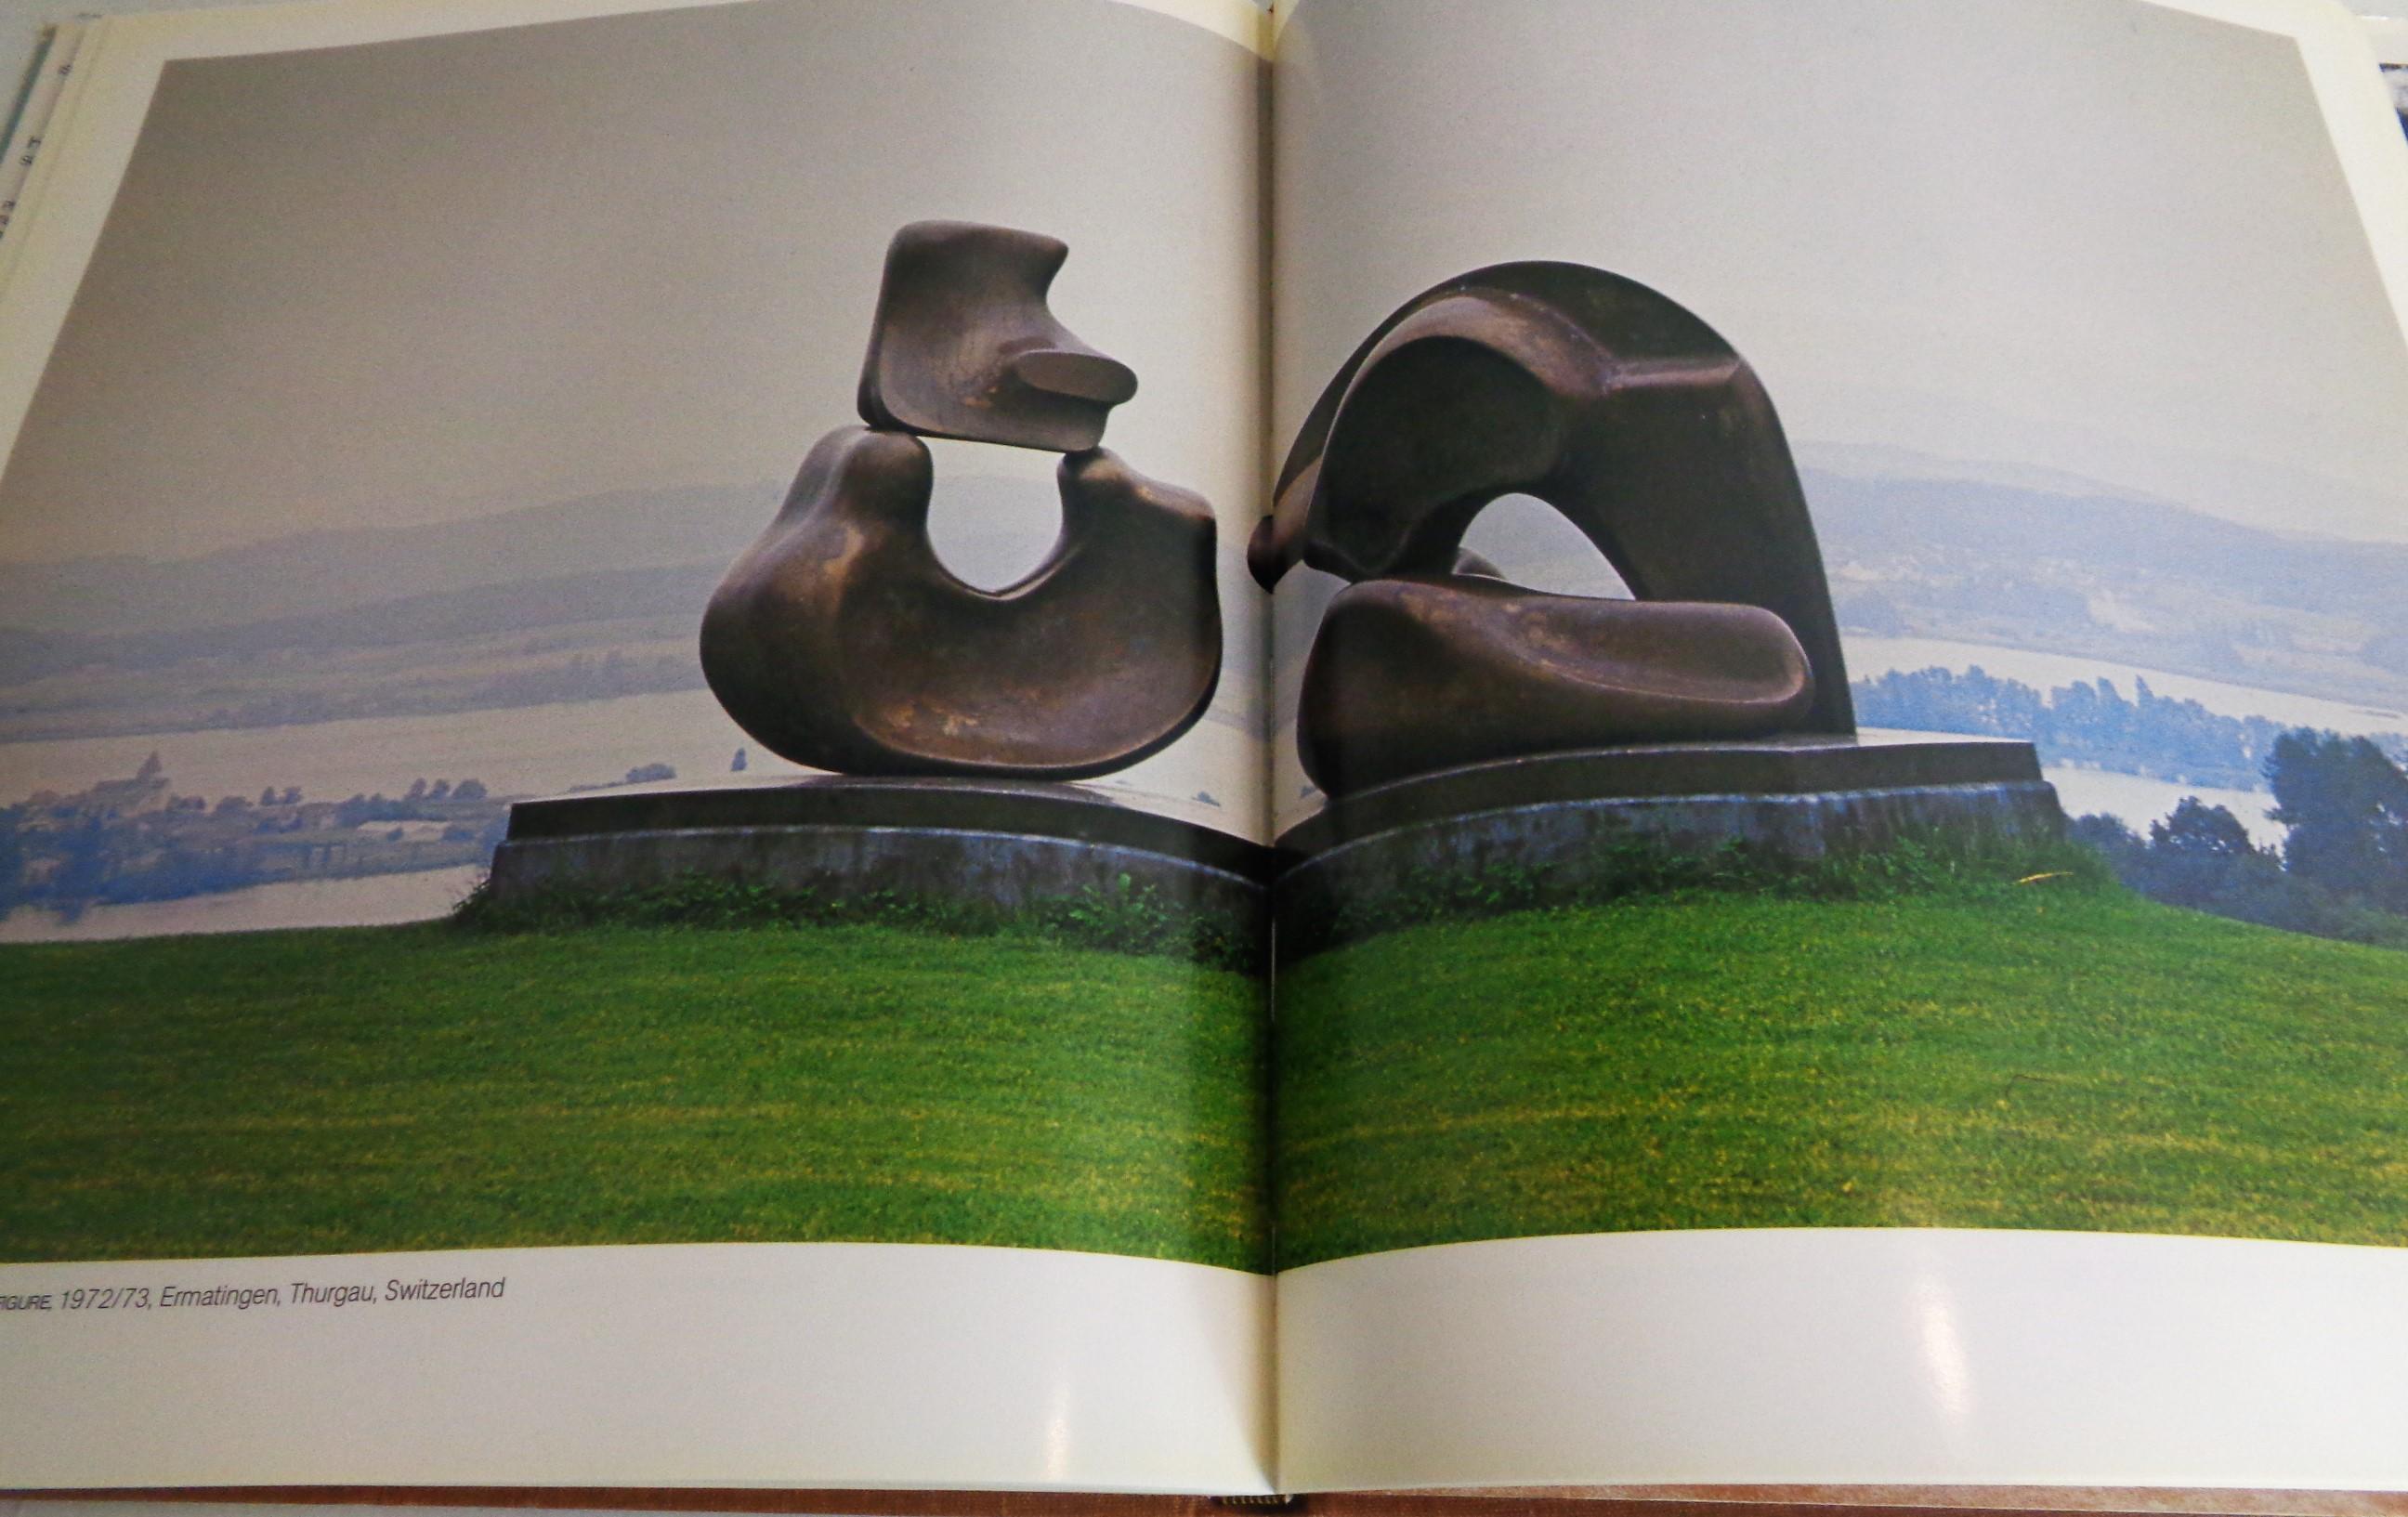 Henry Moore Sculptures in Landscape - 1978 Clarkson N. Potter - 1st Edition For Sale 6